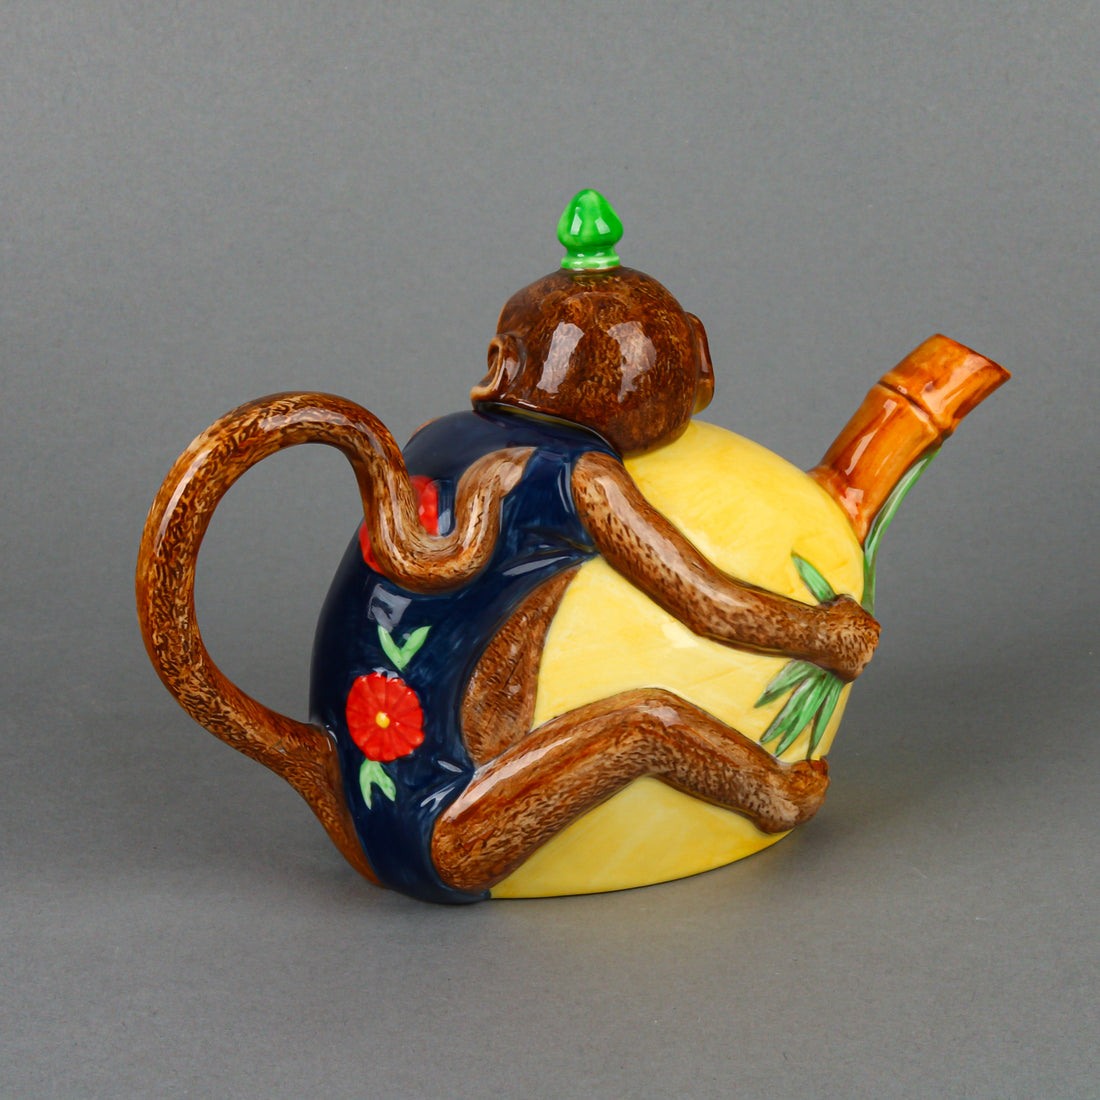 MINTON Archive Collection Majolica Monkey Teapot